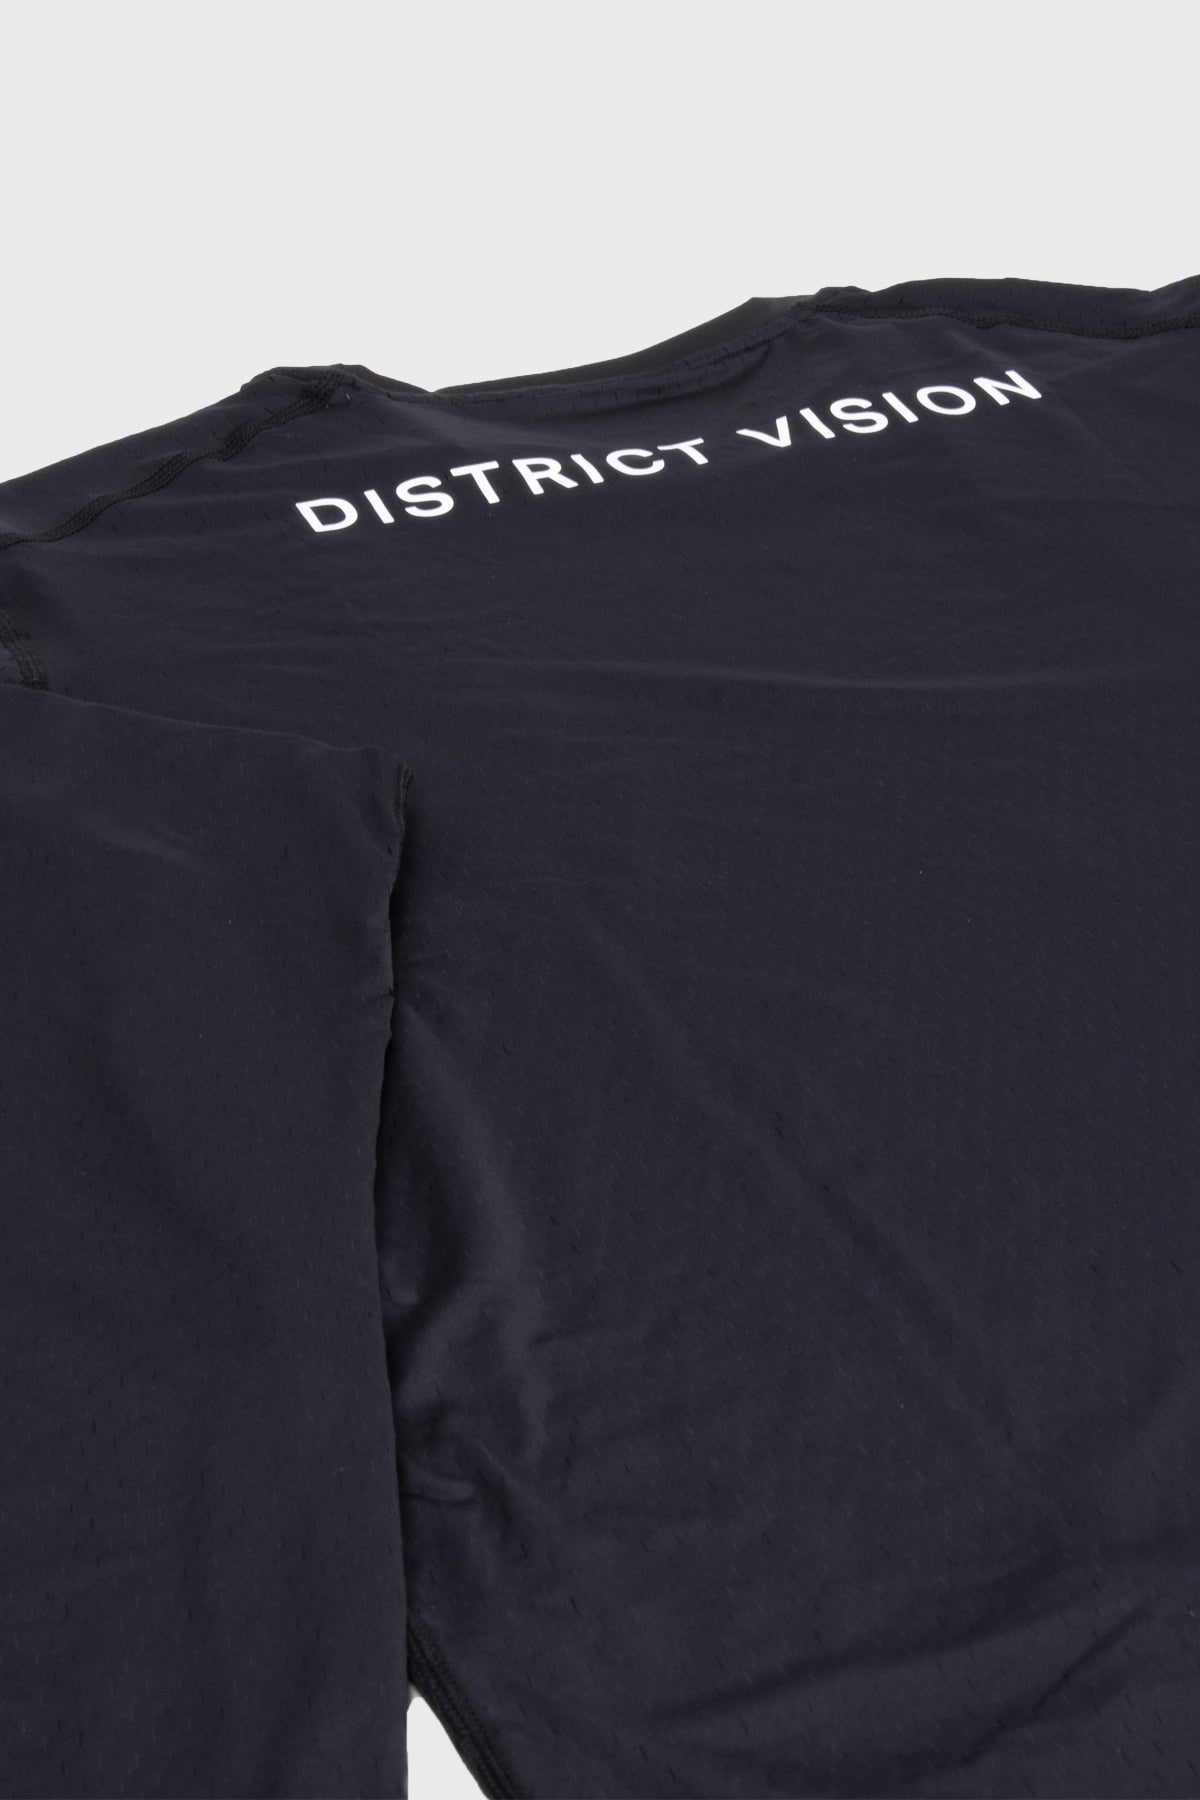 District Vision - air wear tech long sleeve